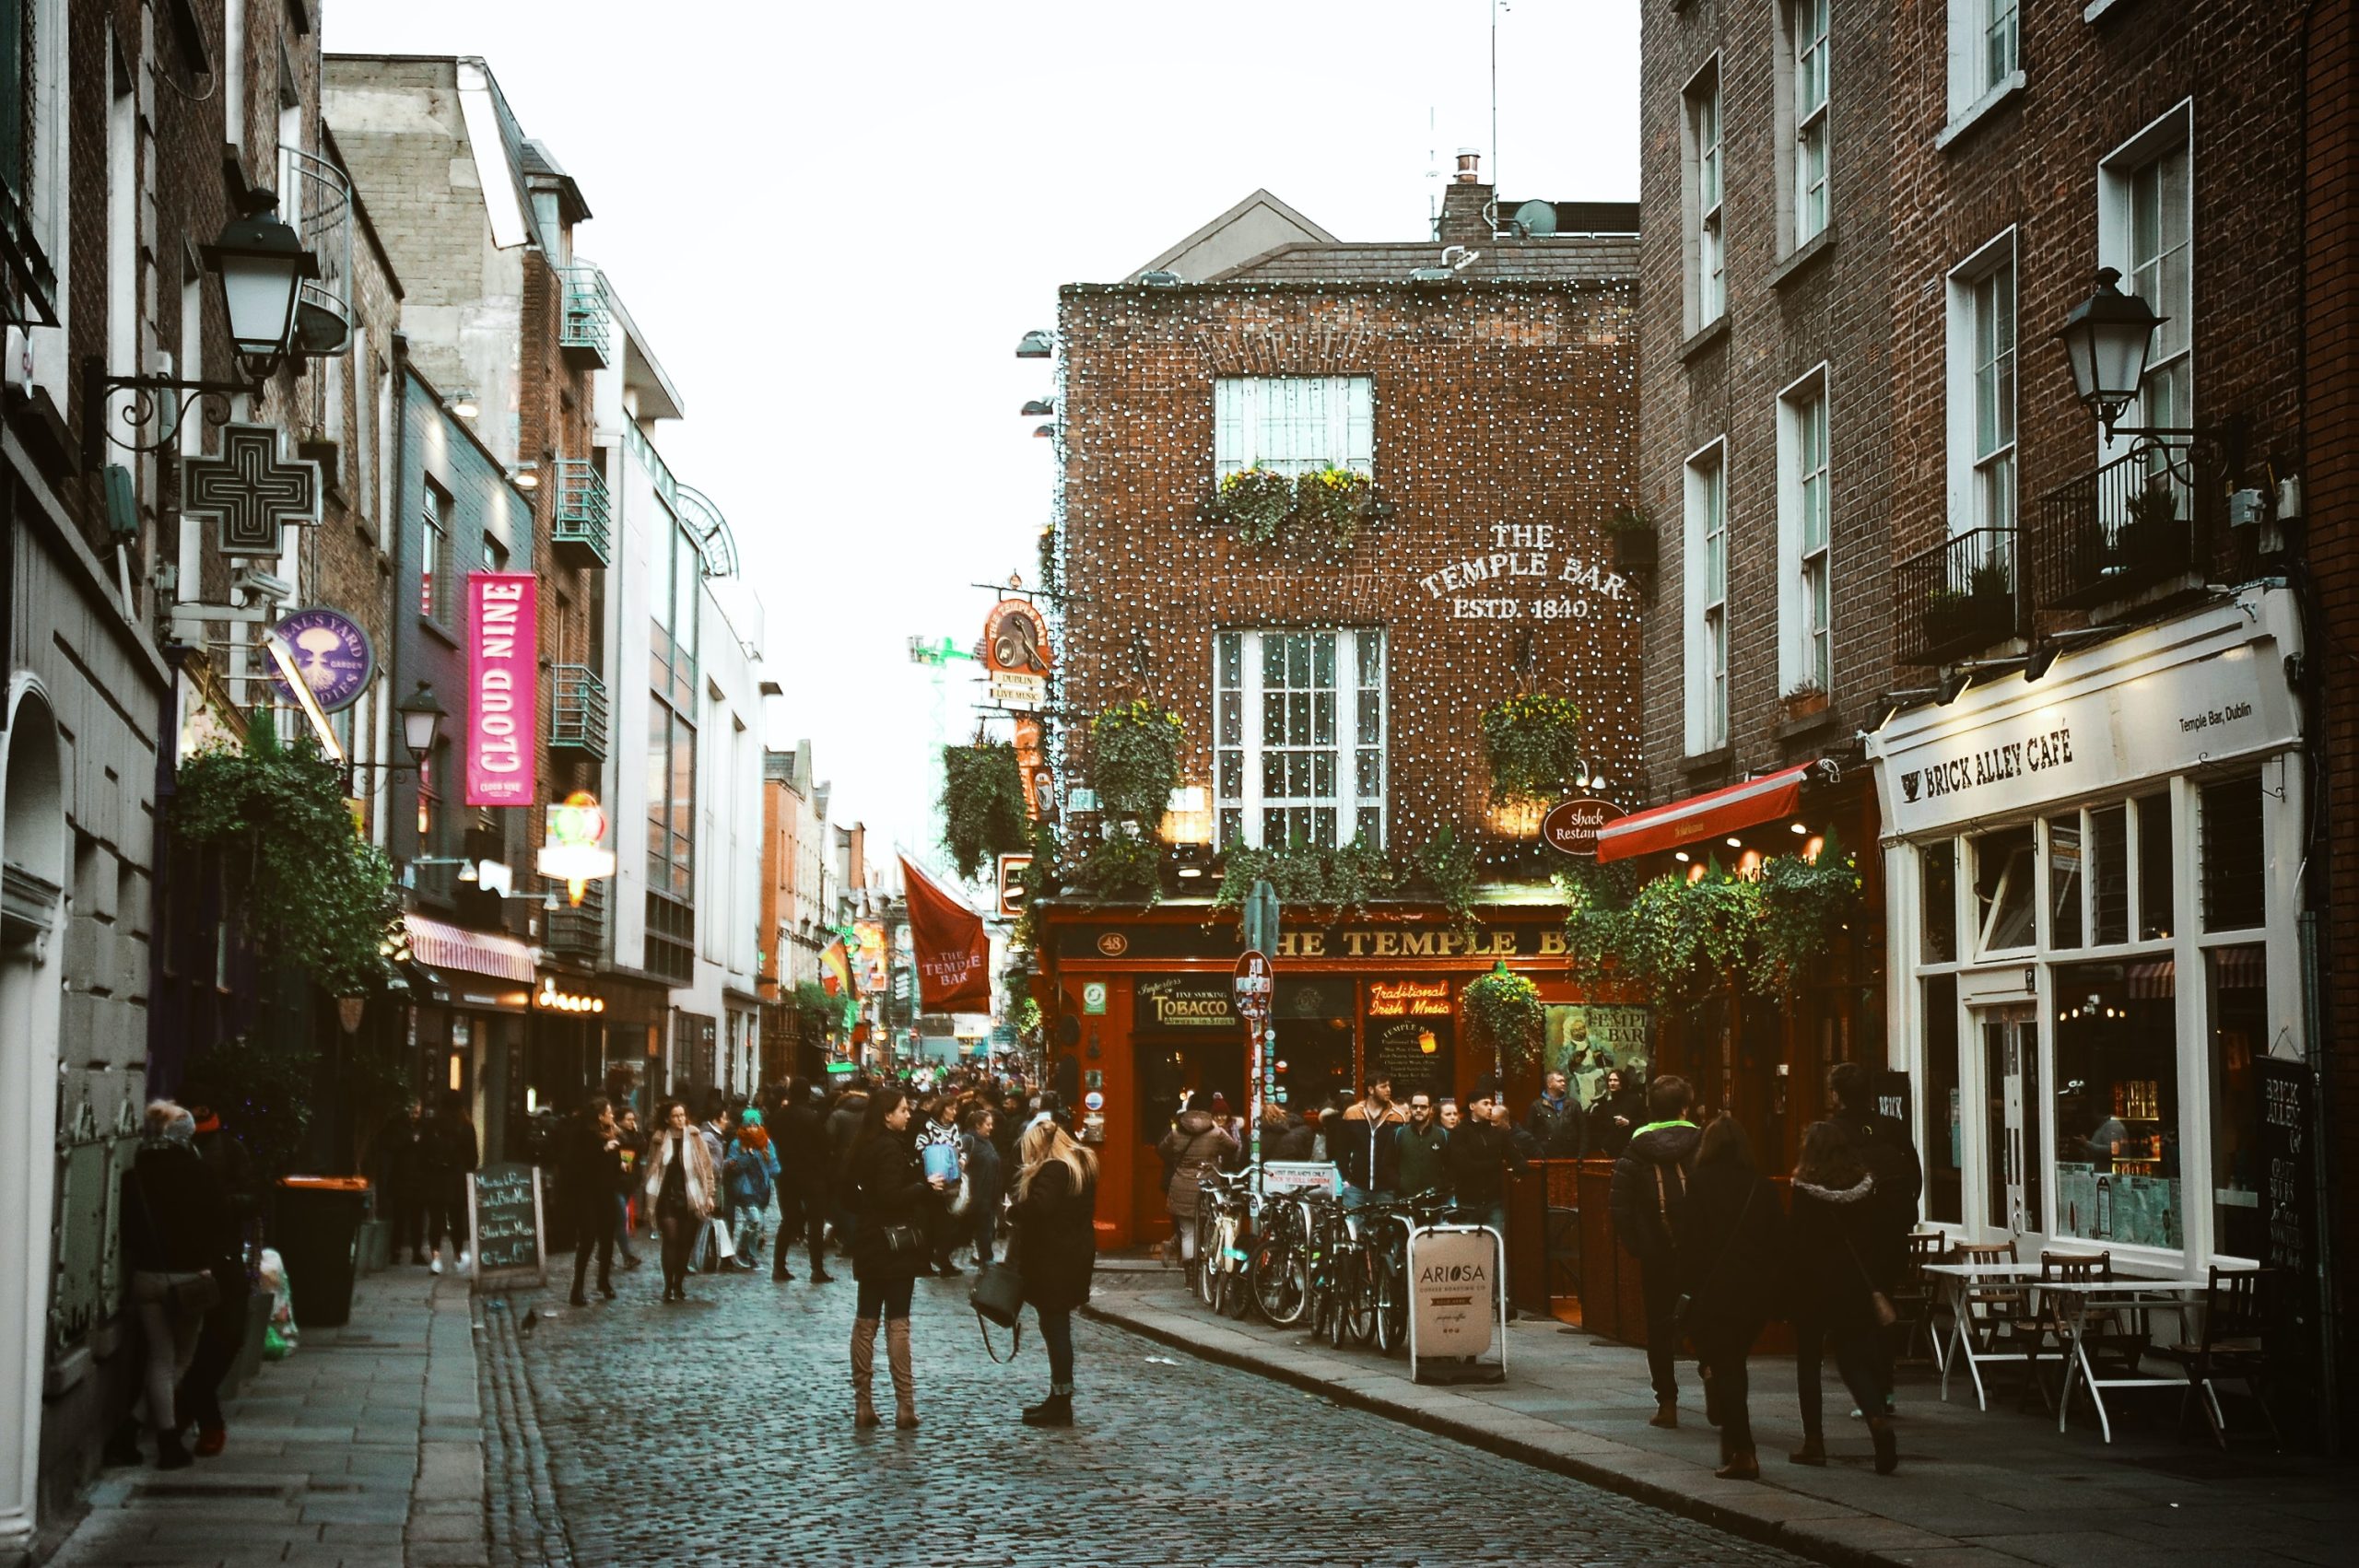 Downtown Dublin, Ireland, right at the corner bar.